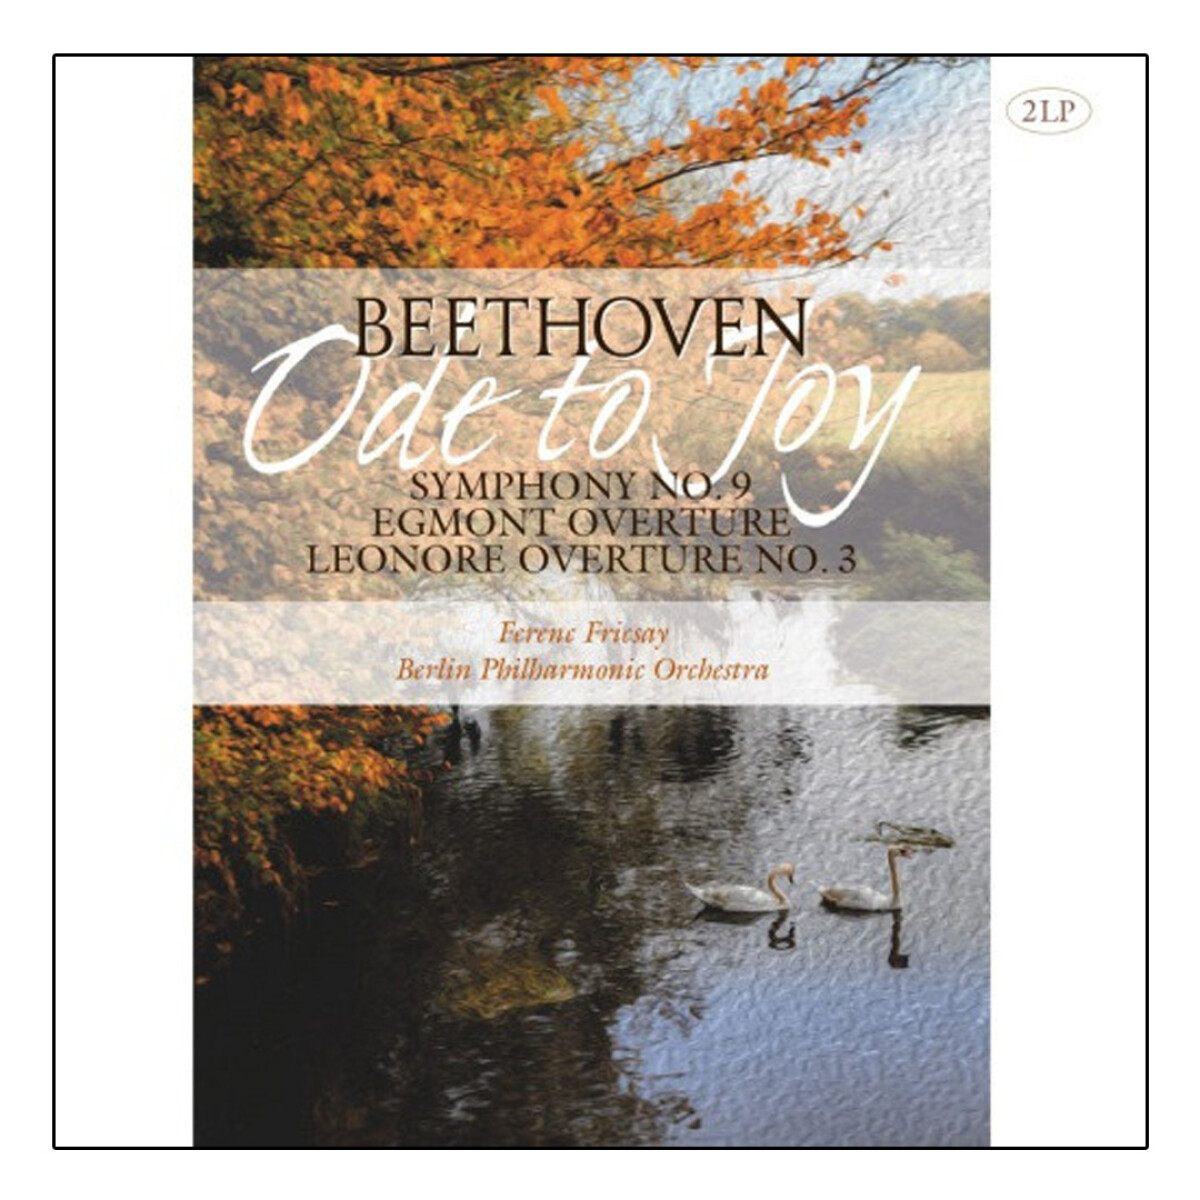 Beethoven-symphony No.9/egmont.. - Vinilo 